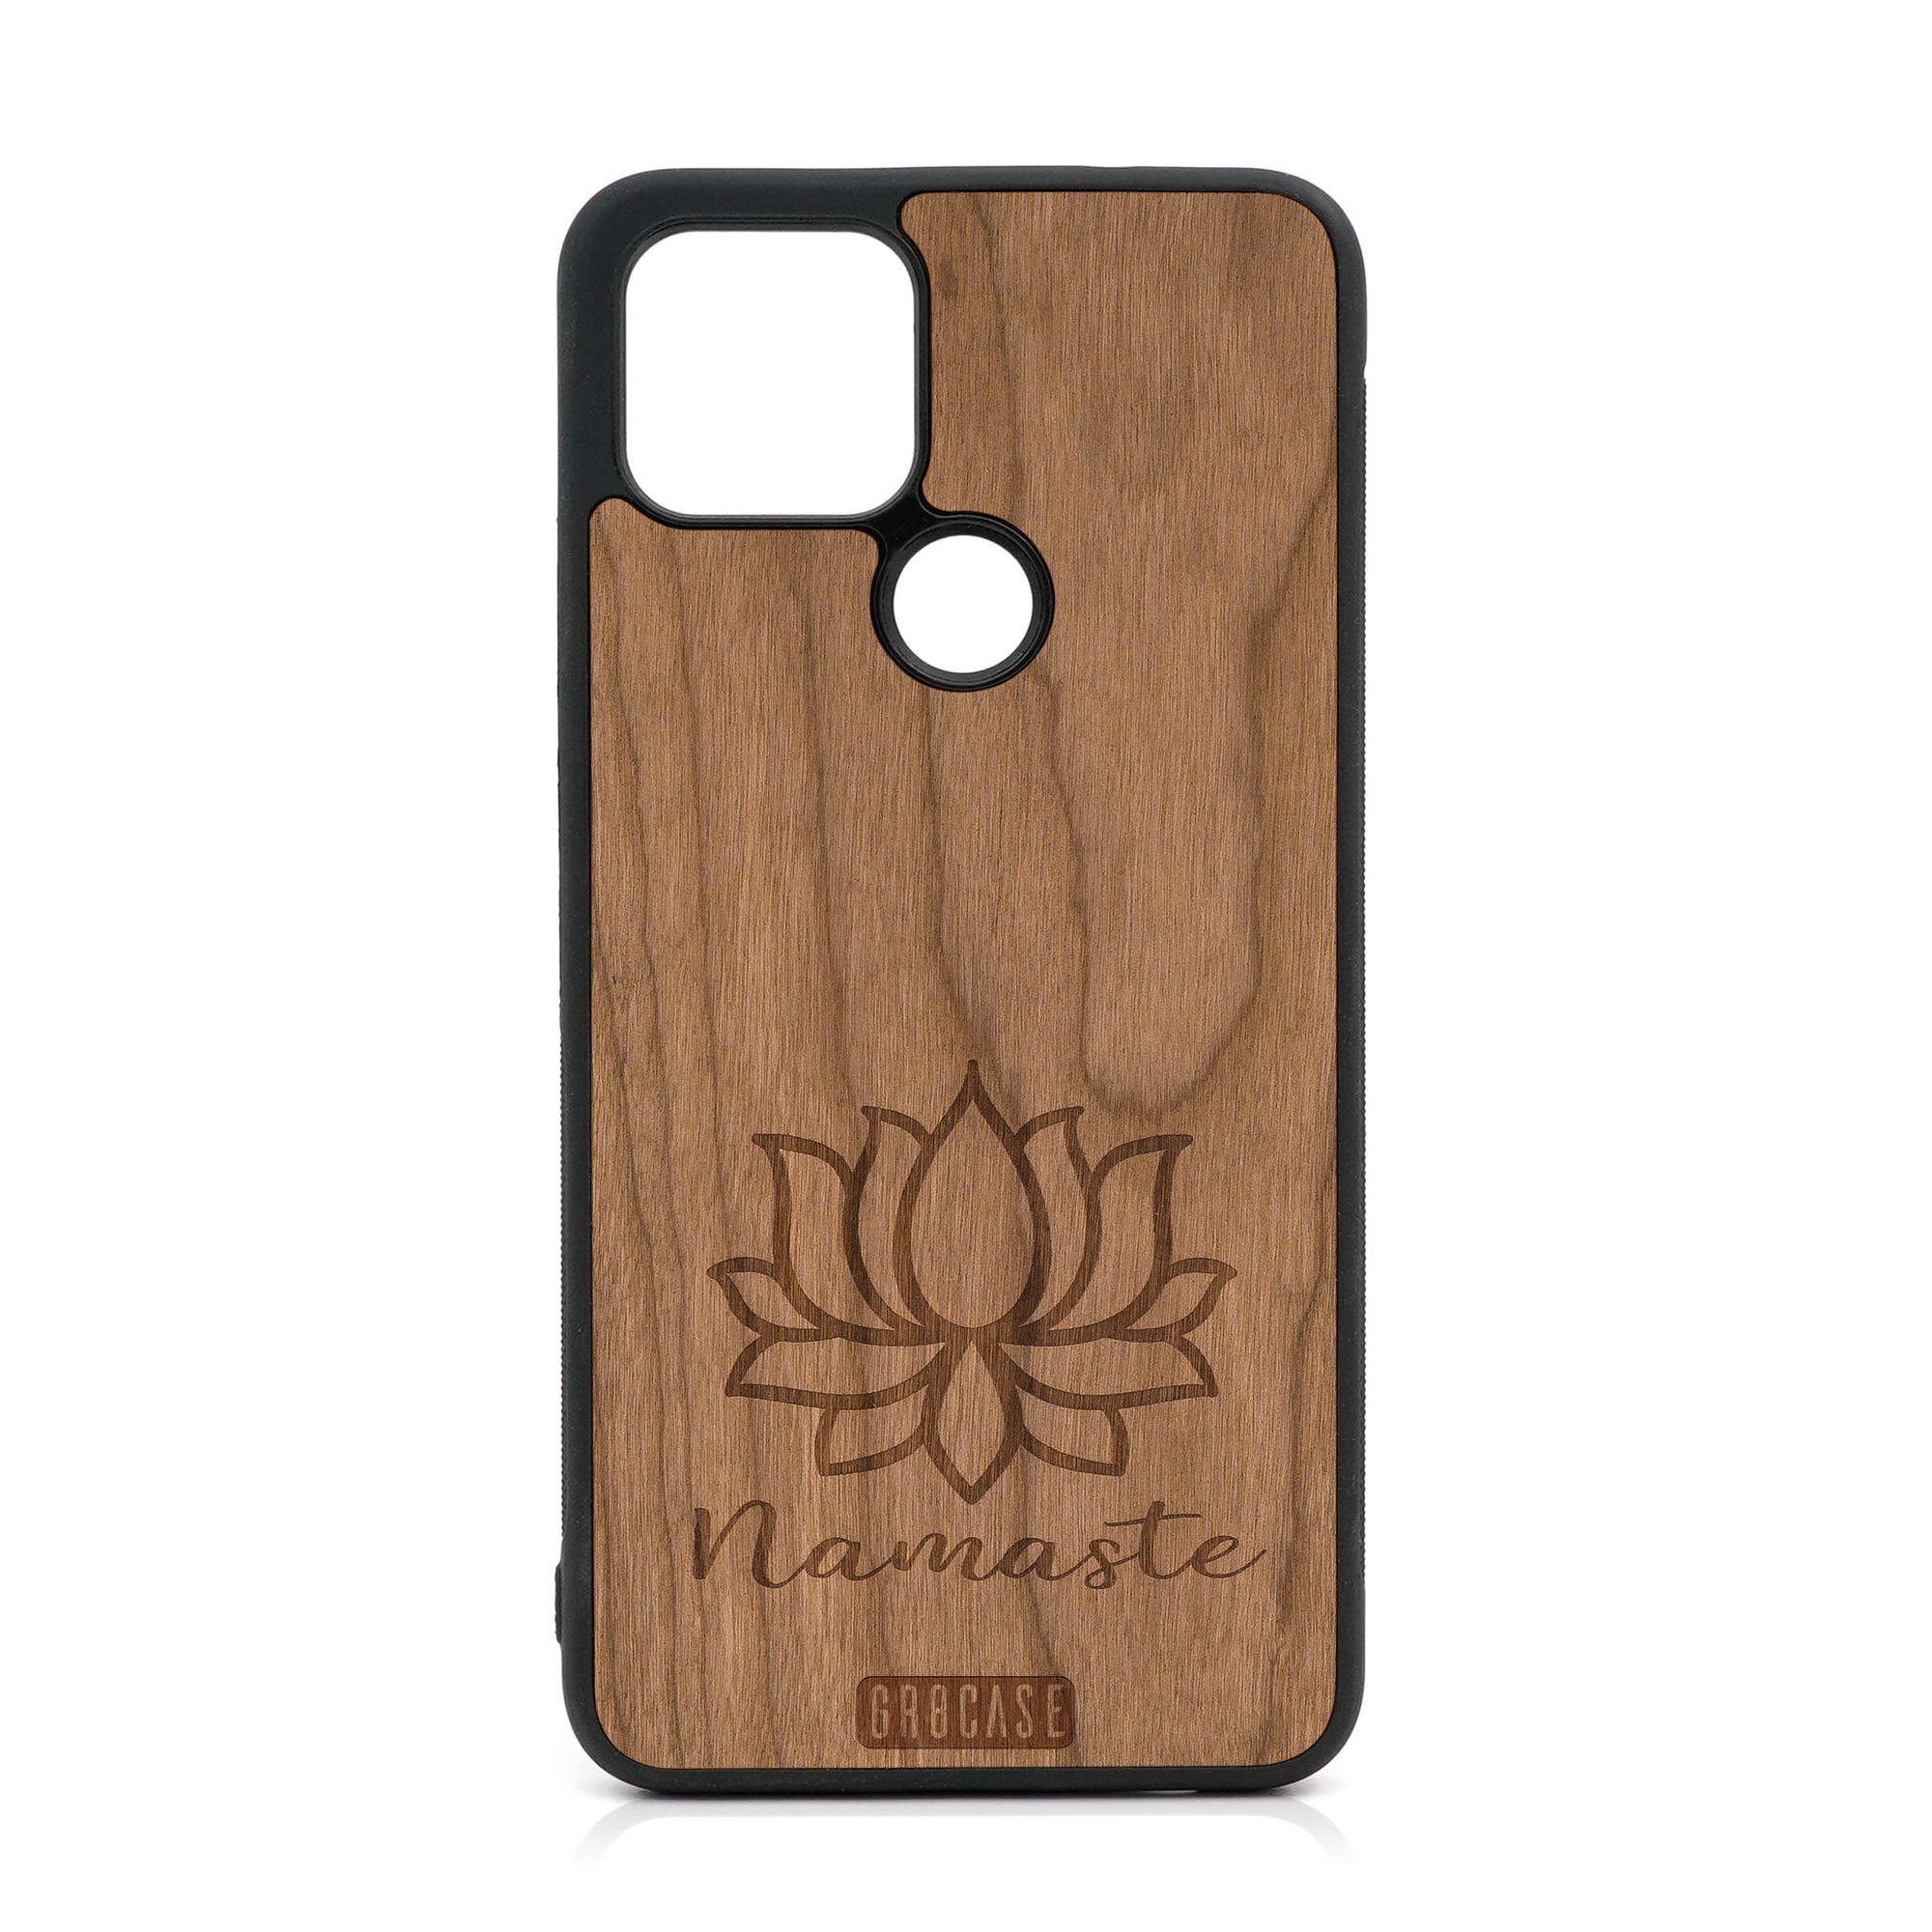 Namaste (Lotus Flower) Design Wood Case For Google Pixel 5 XL/4A 5G